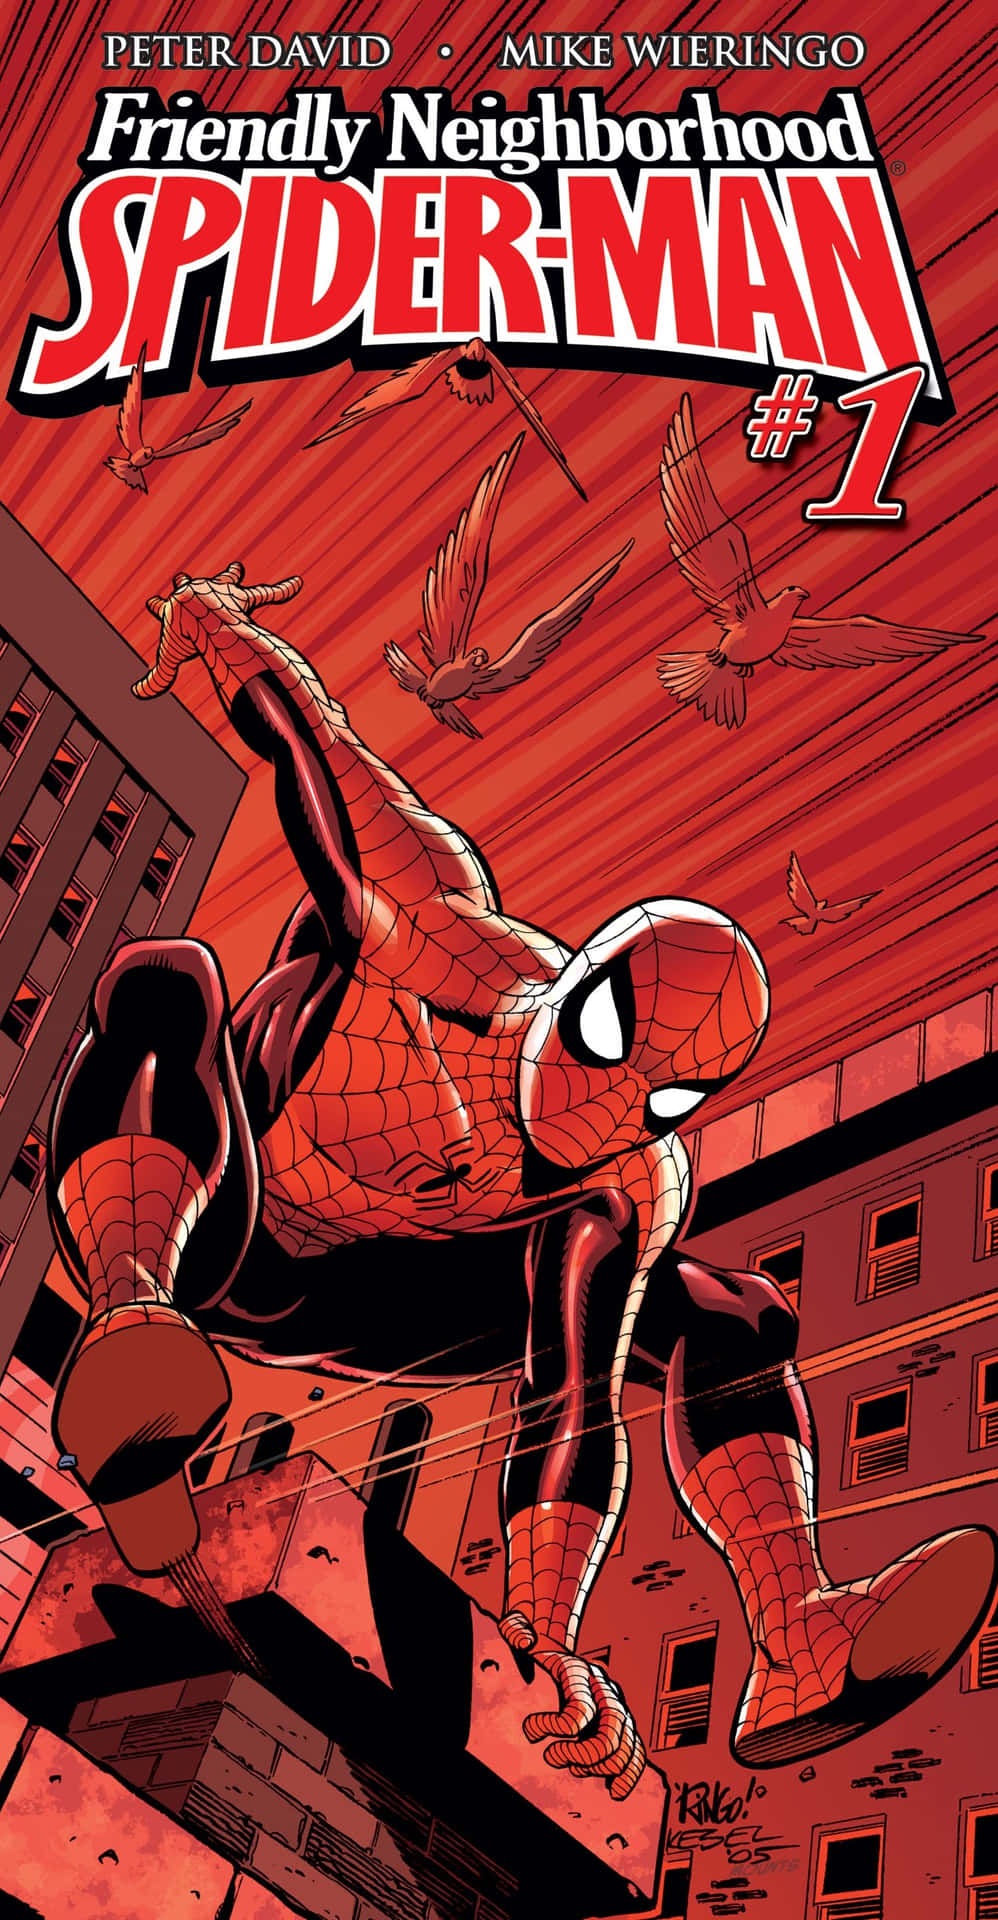 Your Friendly Neighborhood Spider-Man in Action Wallpaper